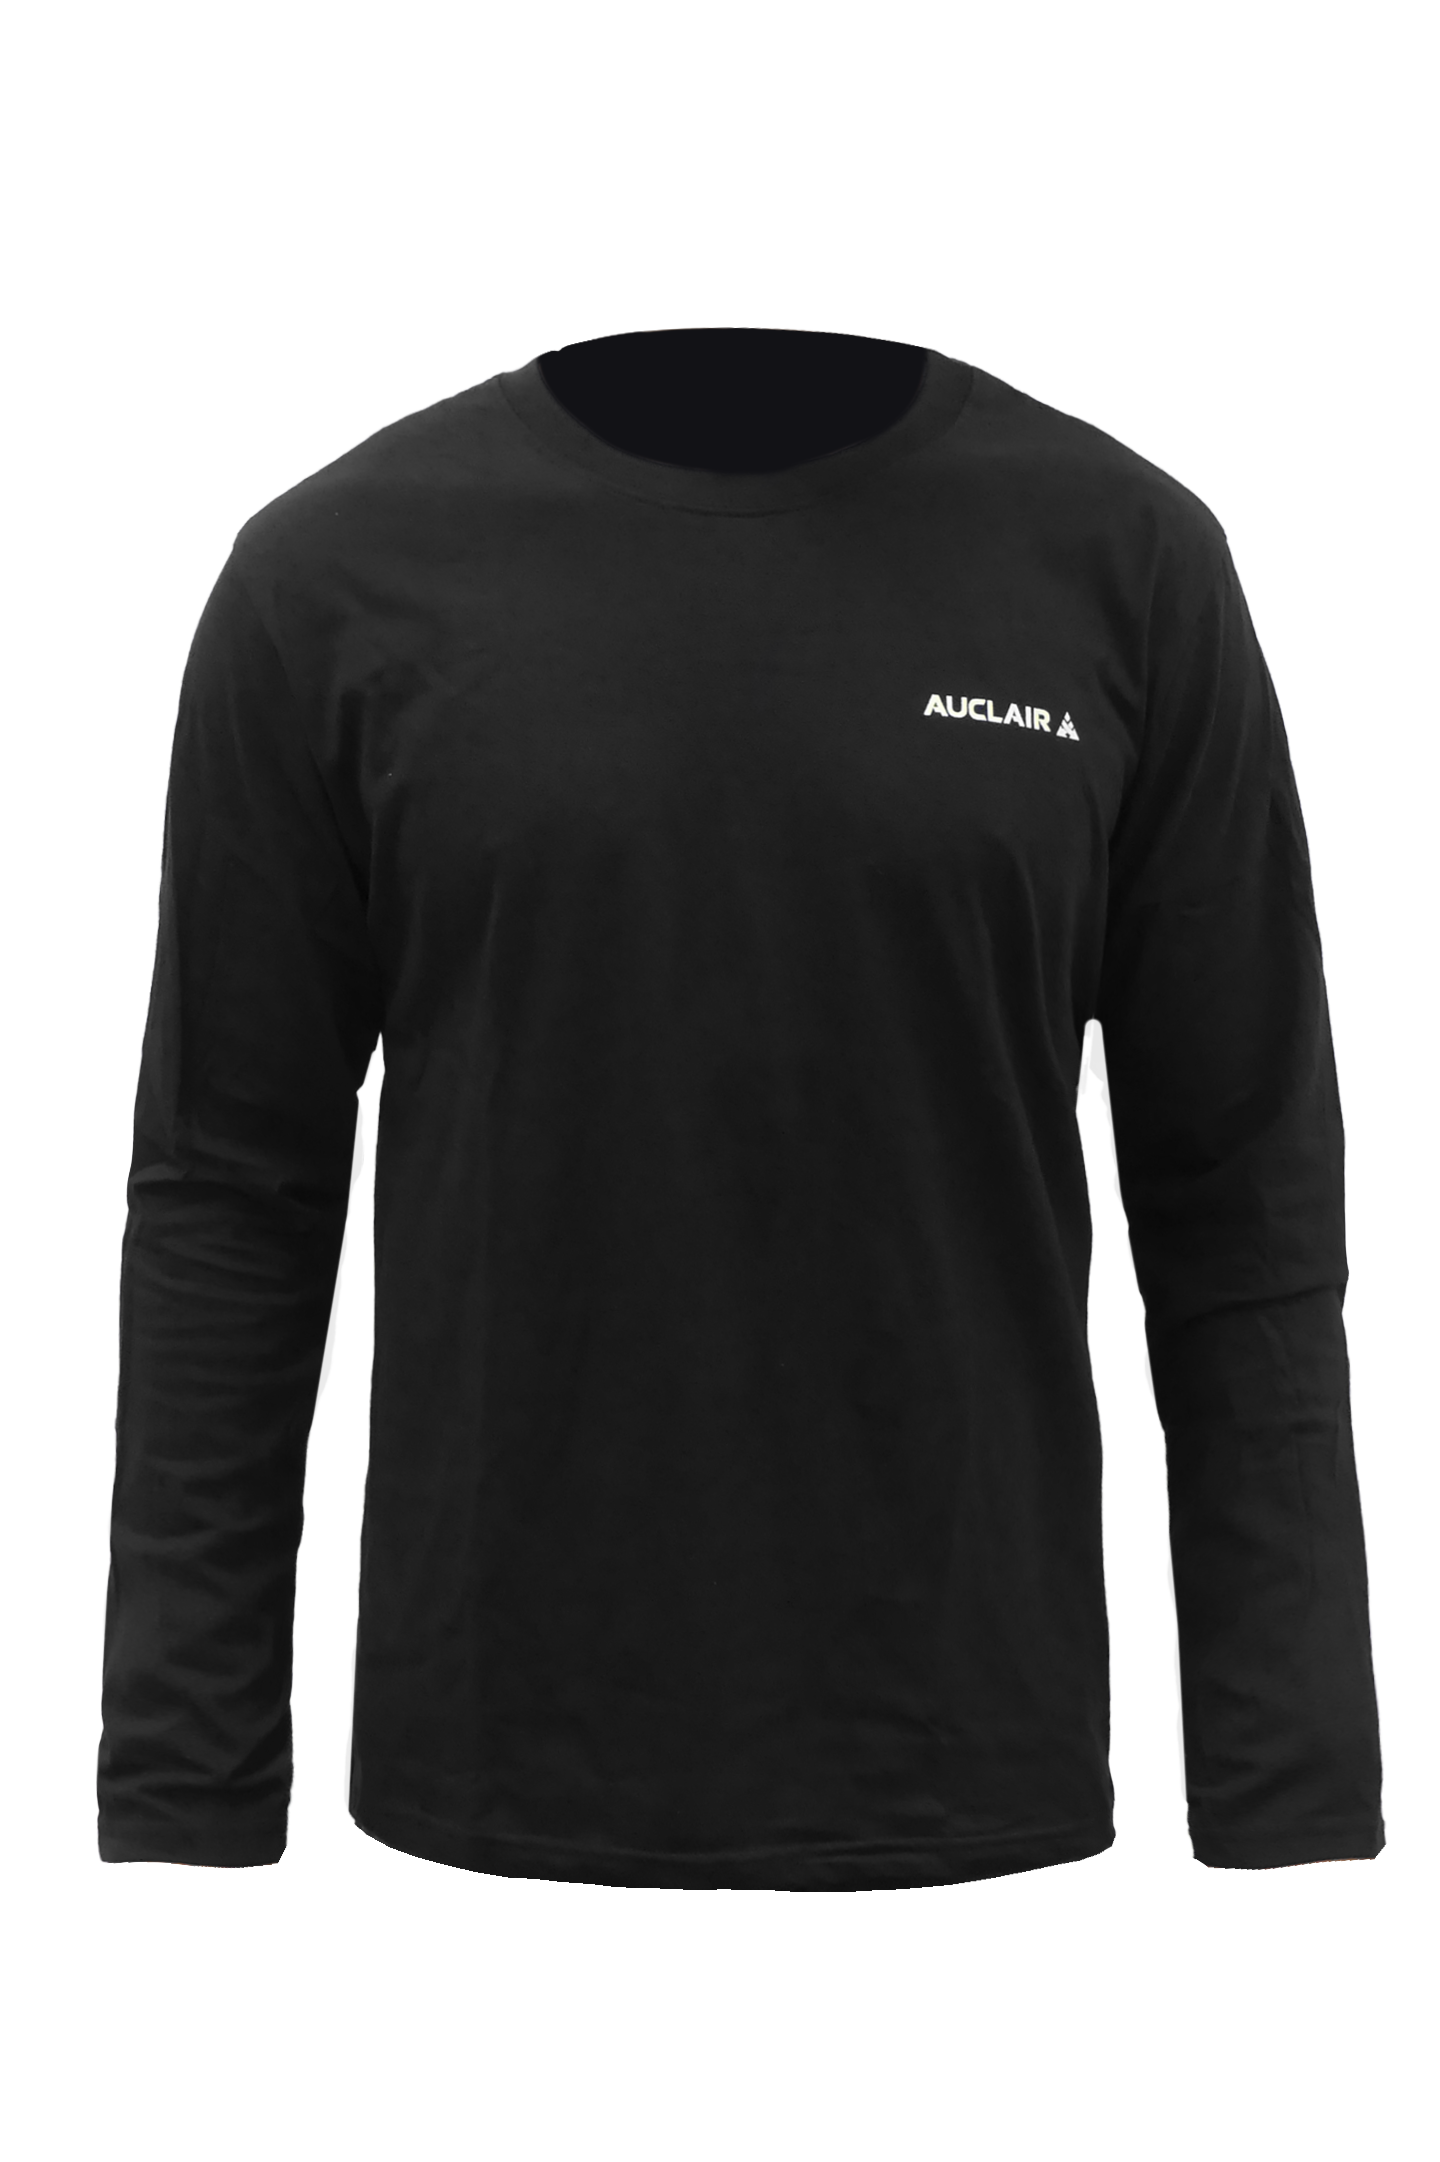 Auclair Long Sleeve Shirt - Adult-101-Auclair-XS-BLACK-Auclair Sports